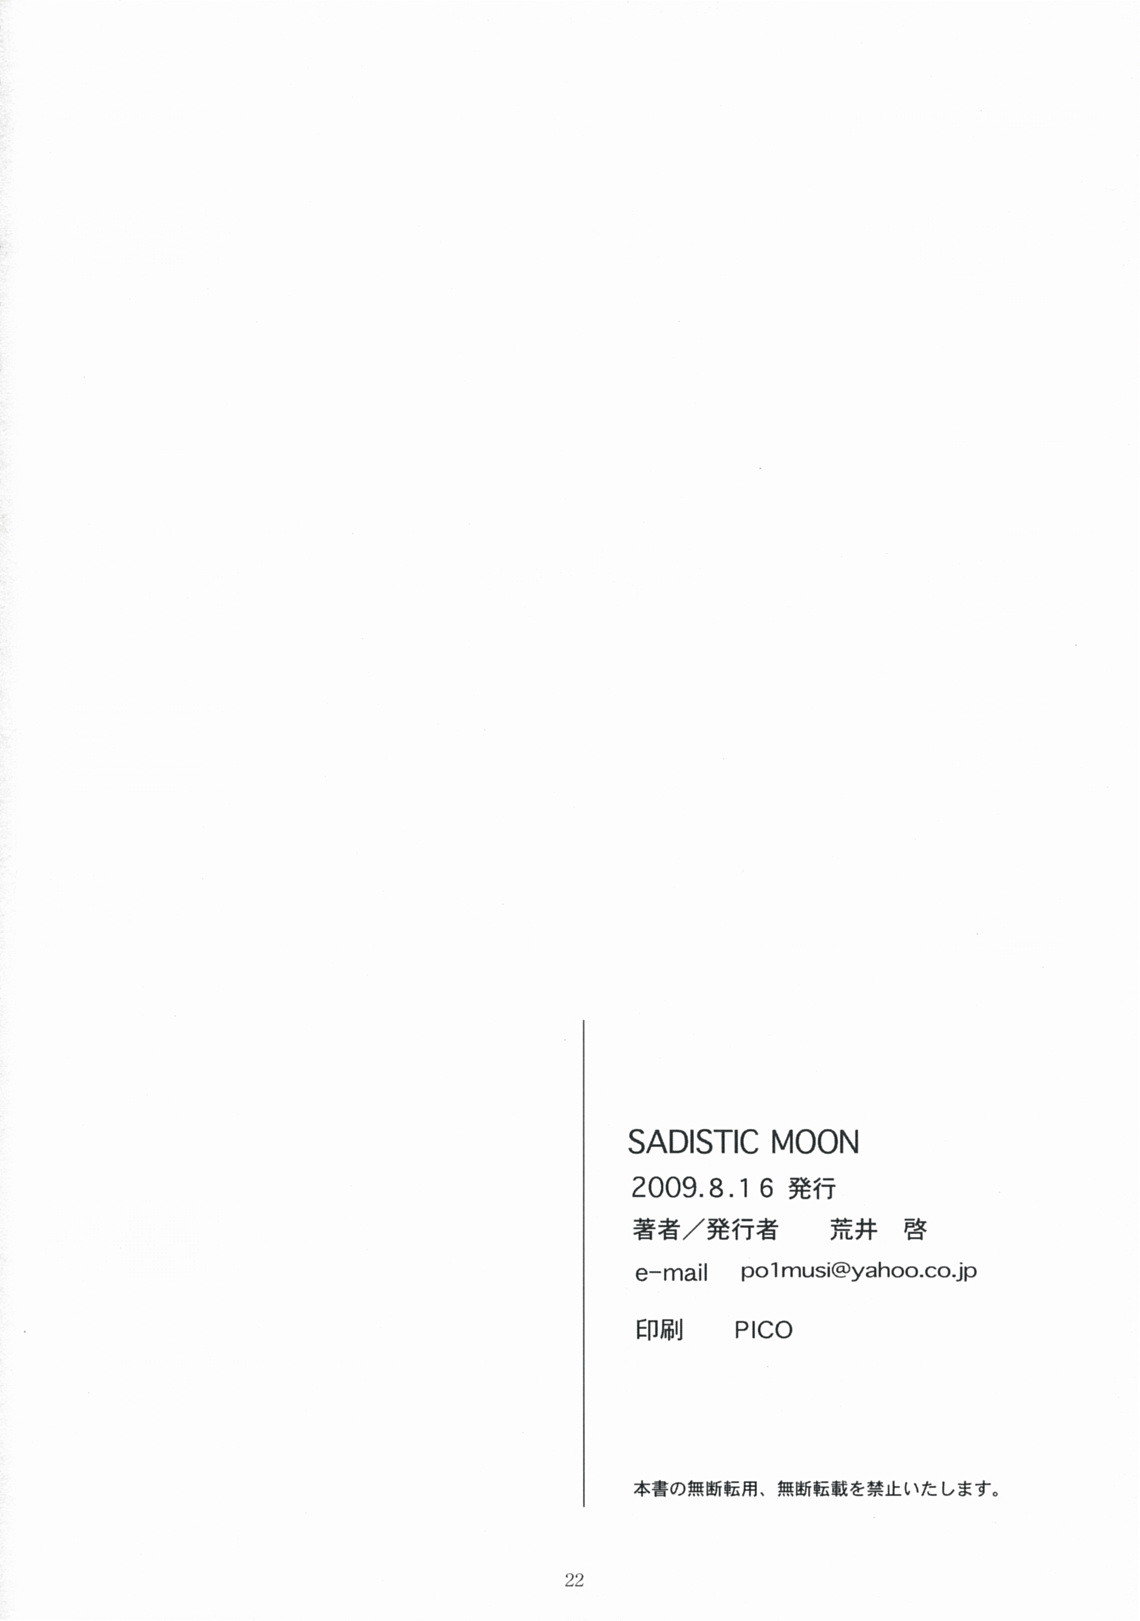 SADISTIC MOON - 20